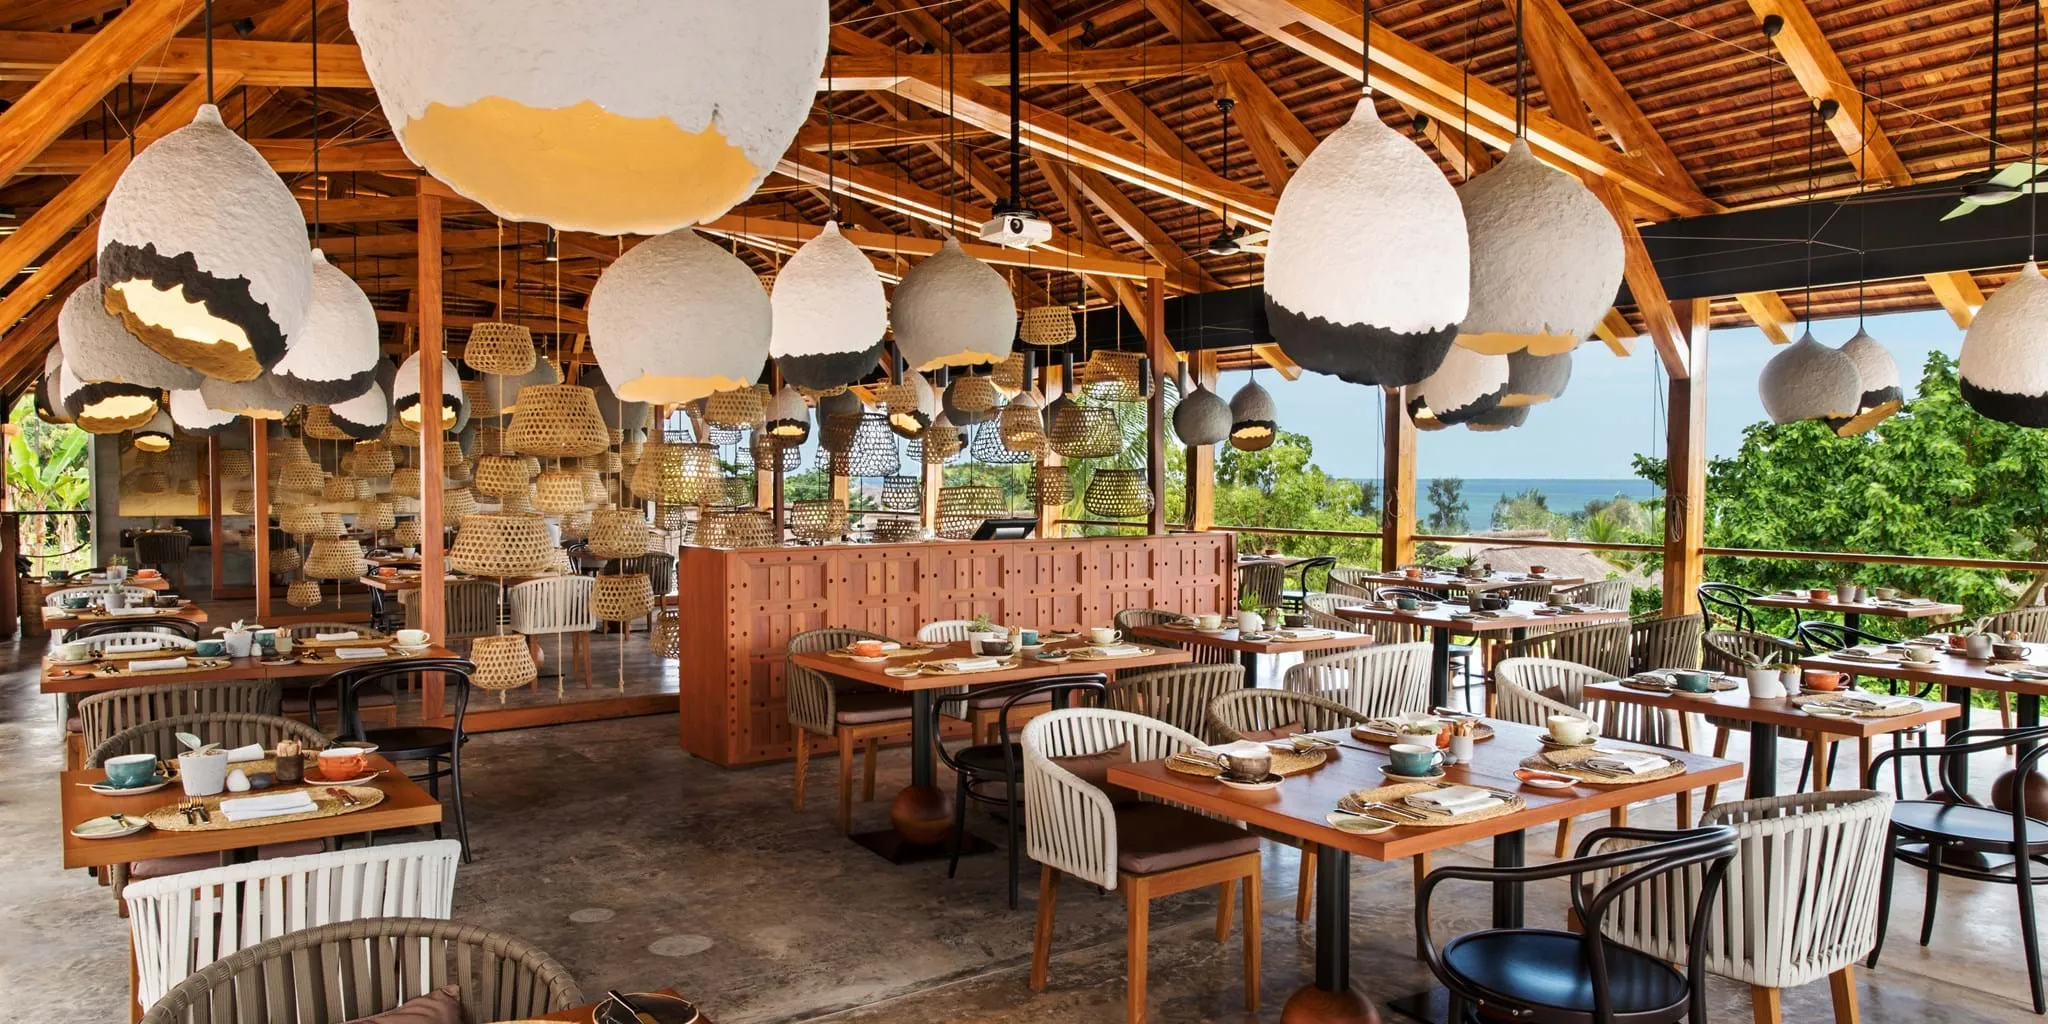 Livingstone Beach Restaurant in Tanzania, Africa | Restaurants - Rated 3.1